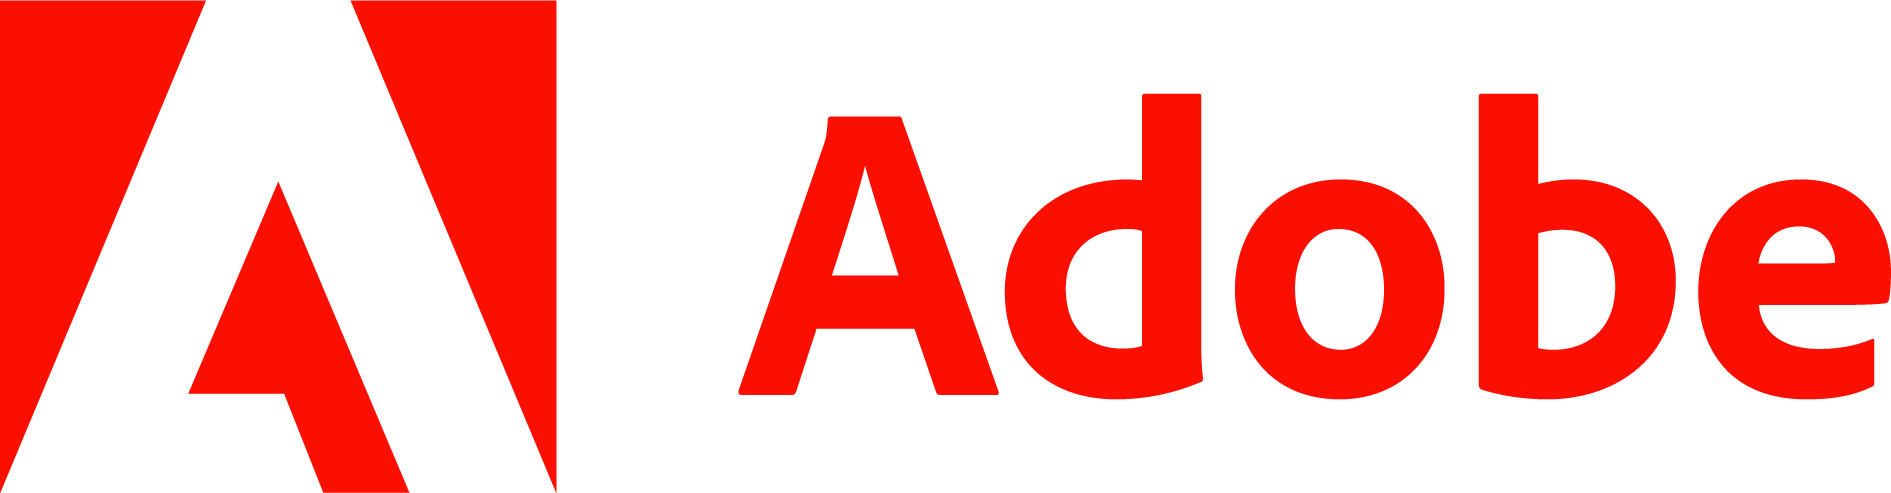 Adobe_Corporate_Logo